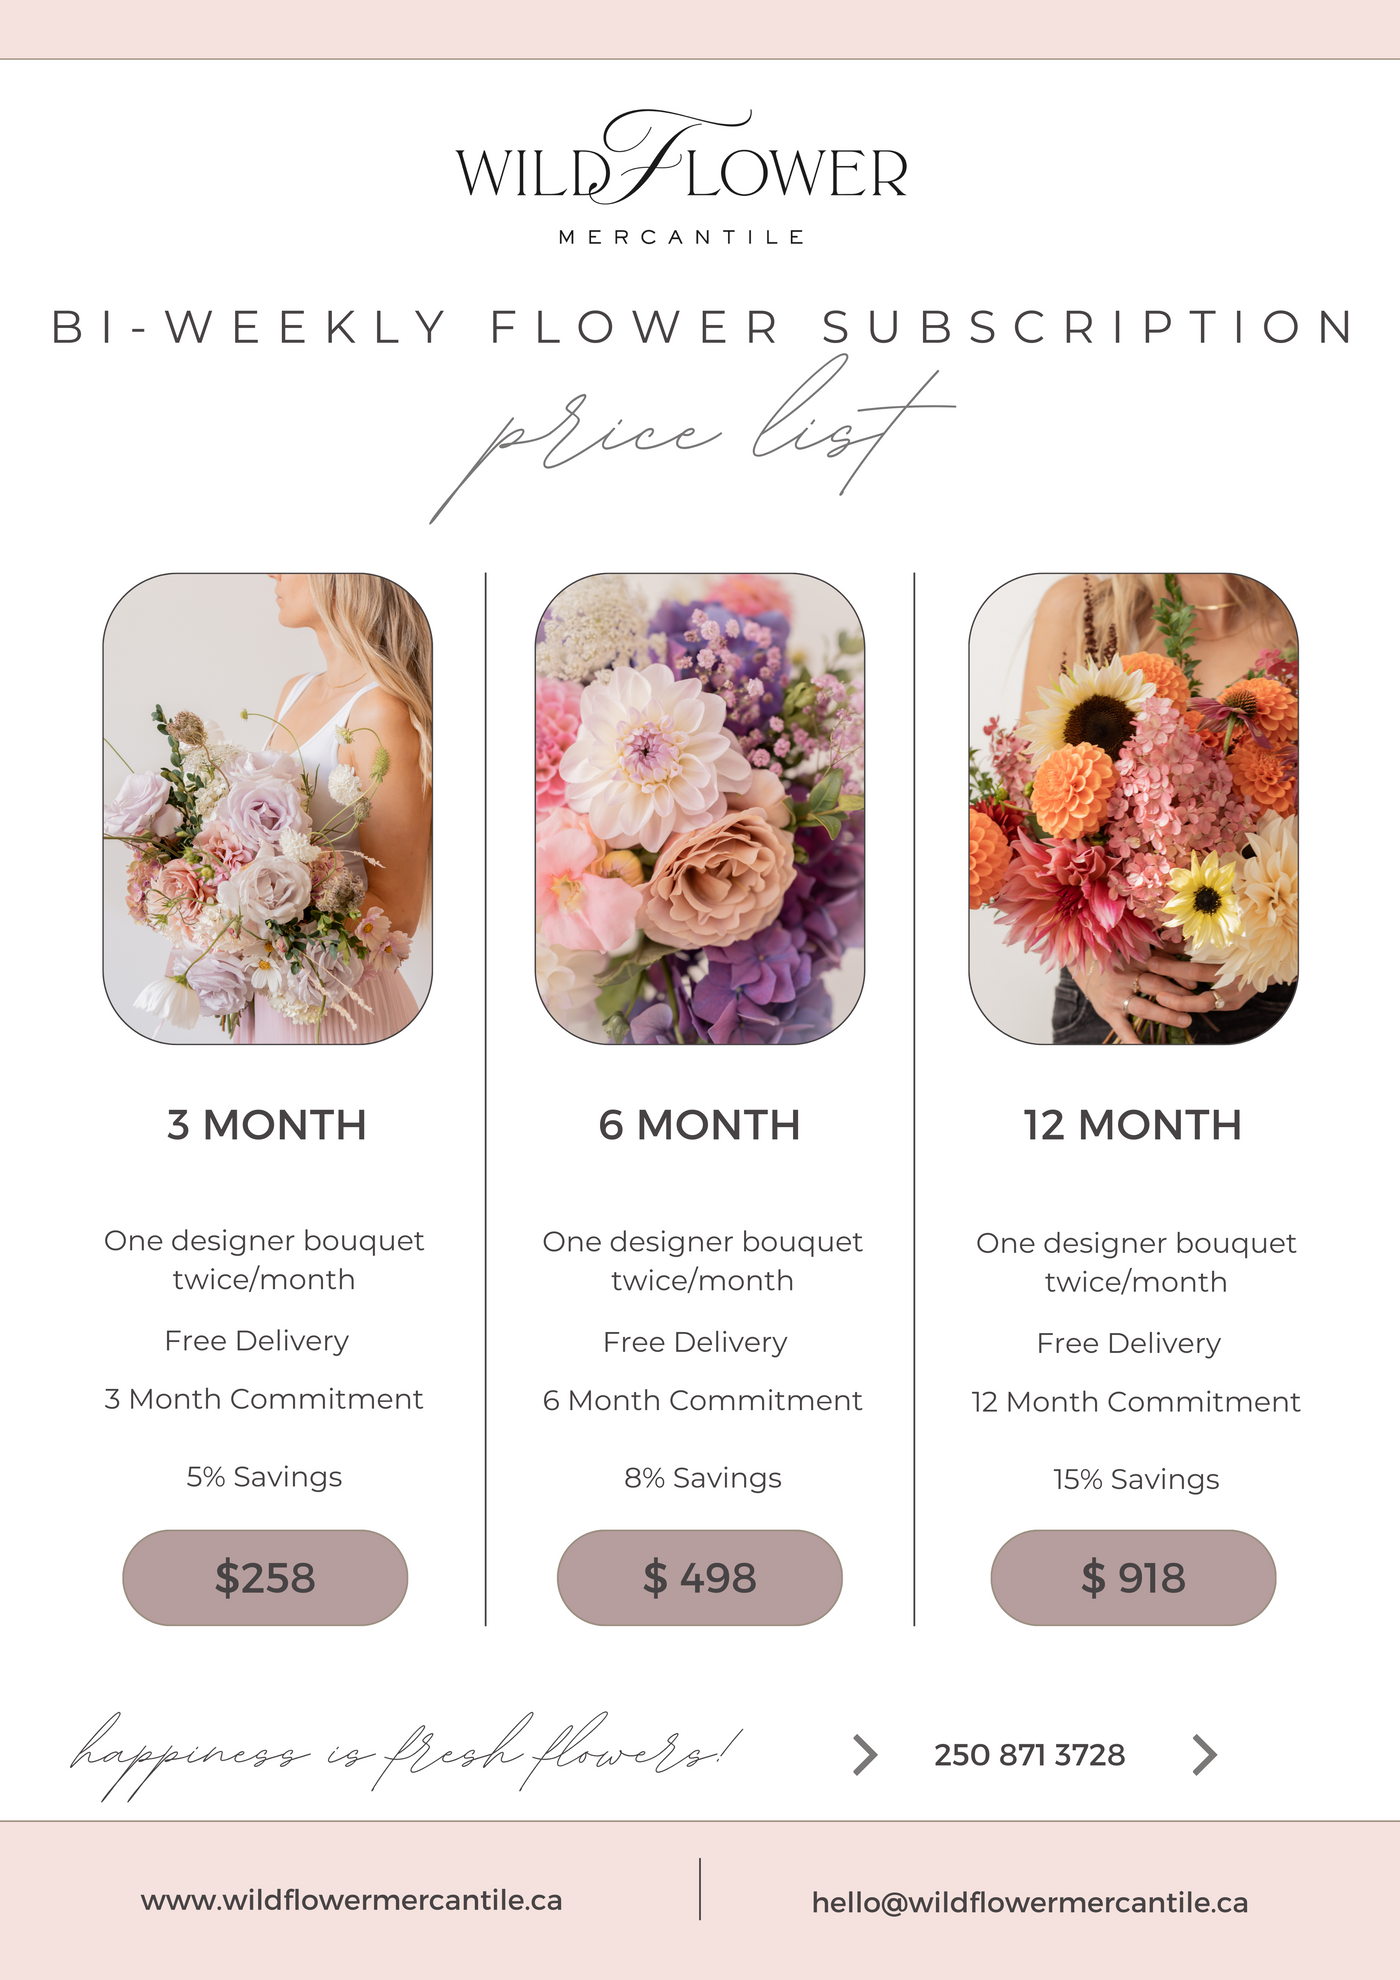 Business Flower Subscription Bi - Weekly